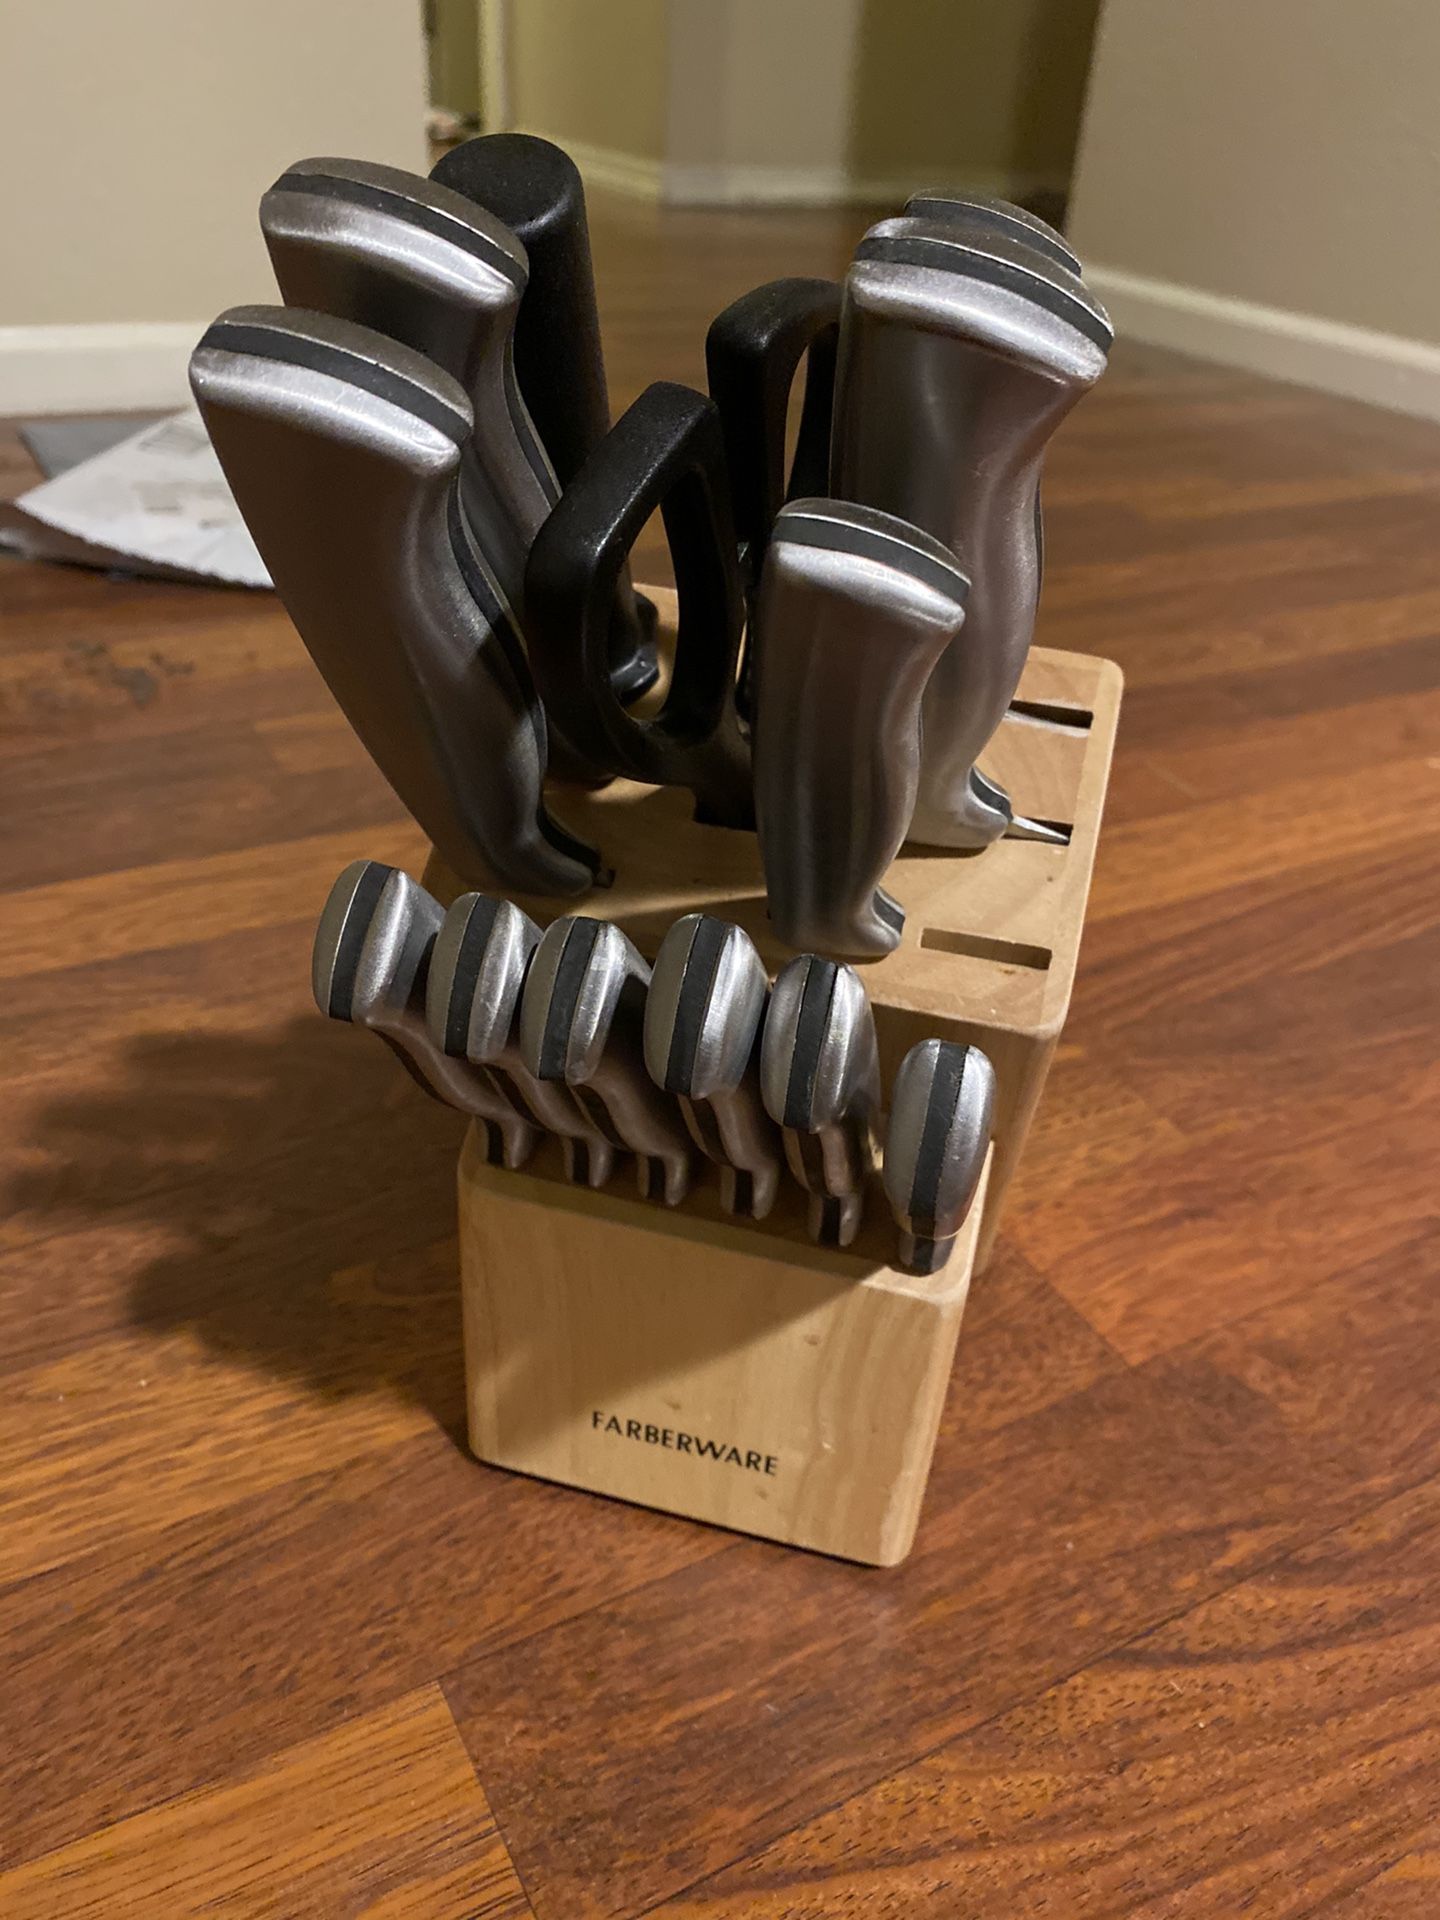 Farberware knife set wooden block 14 pieces kitchen tool